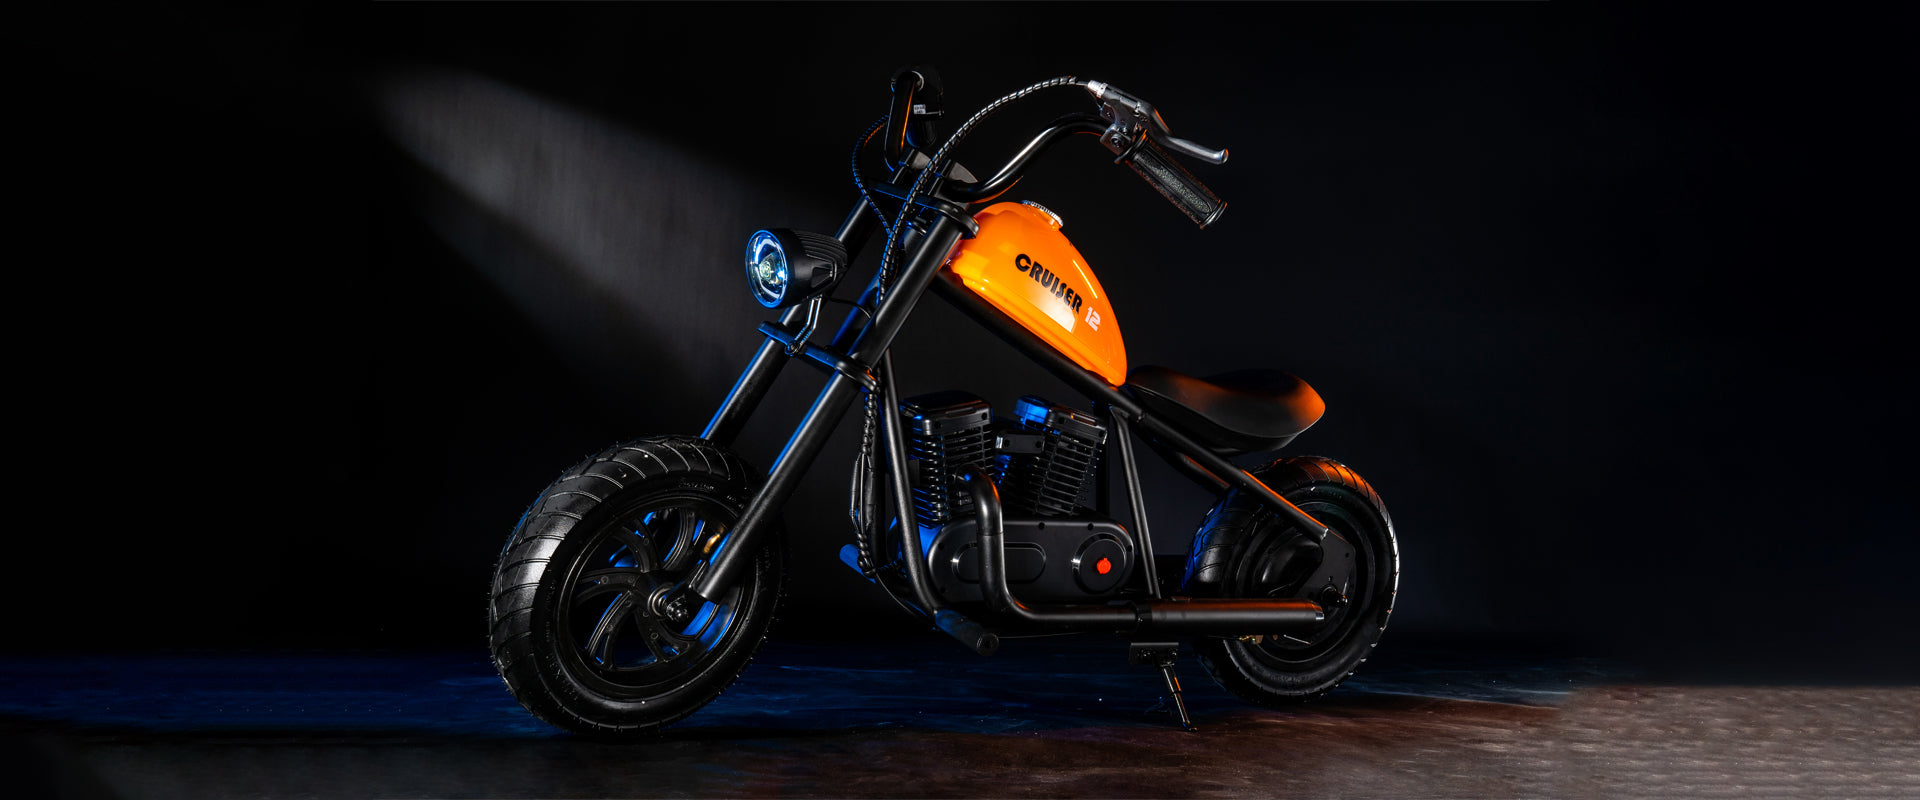 mini-chopper-motorcycle-electric-bike-for-kids-cruiser-12-with-headlight